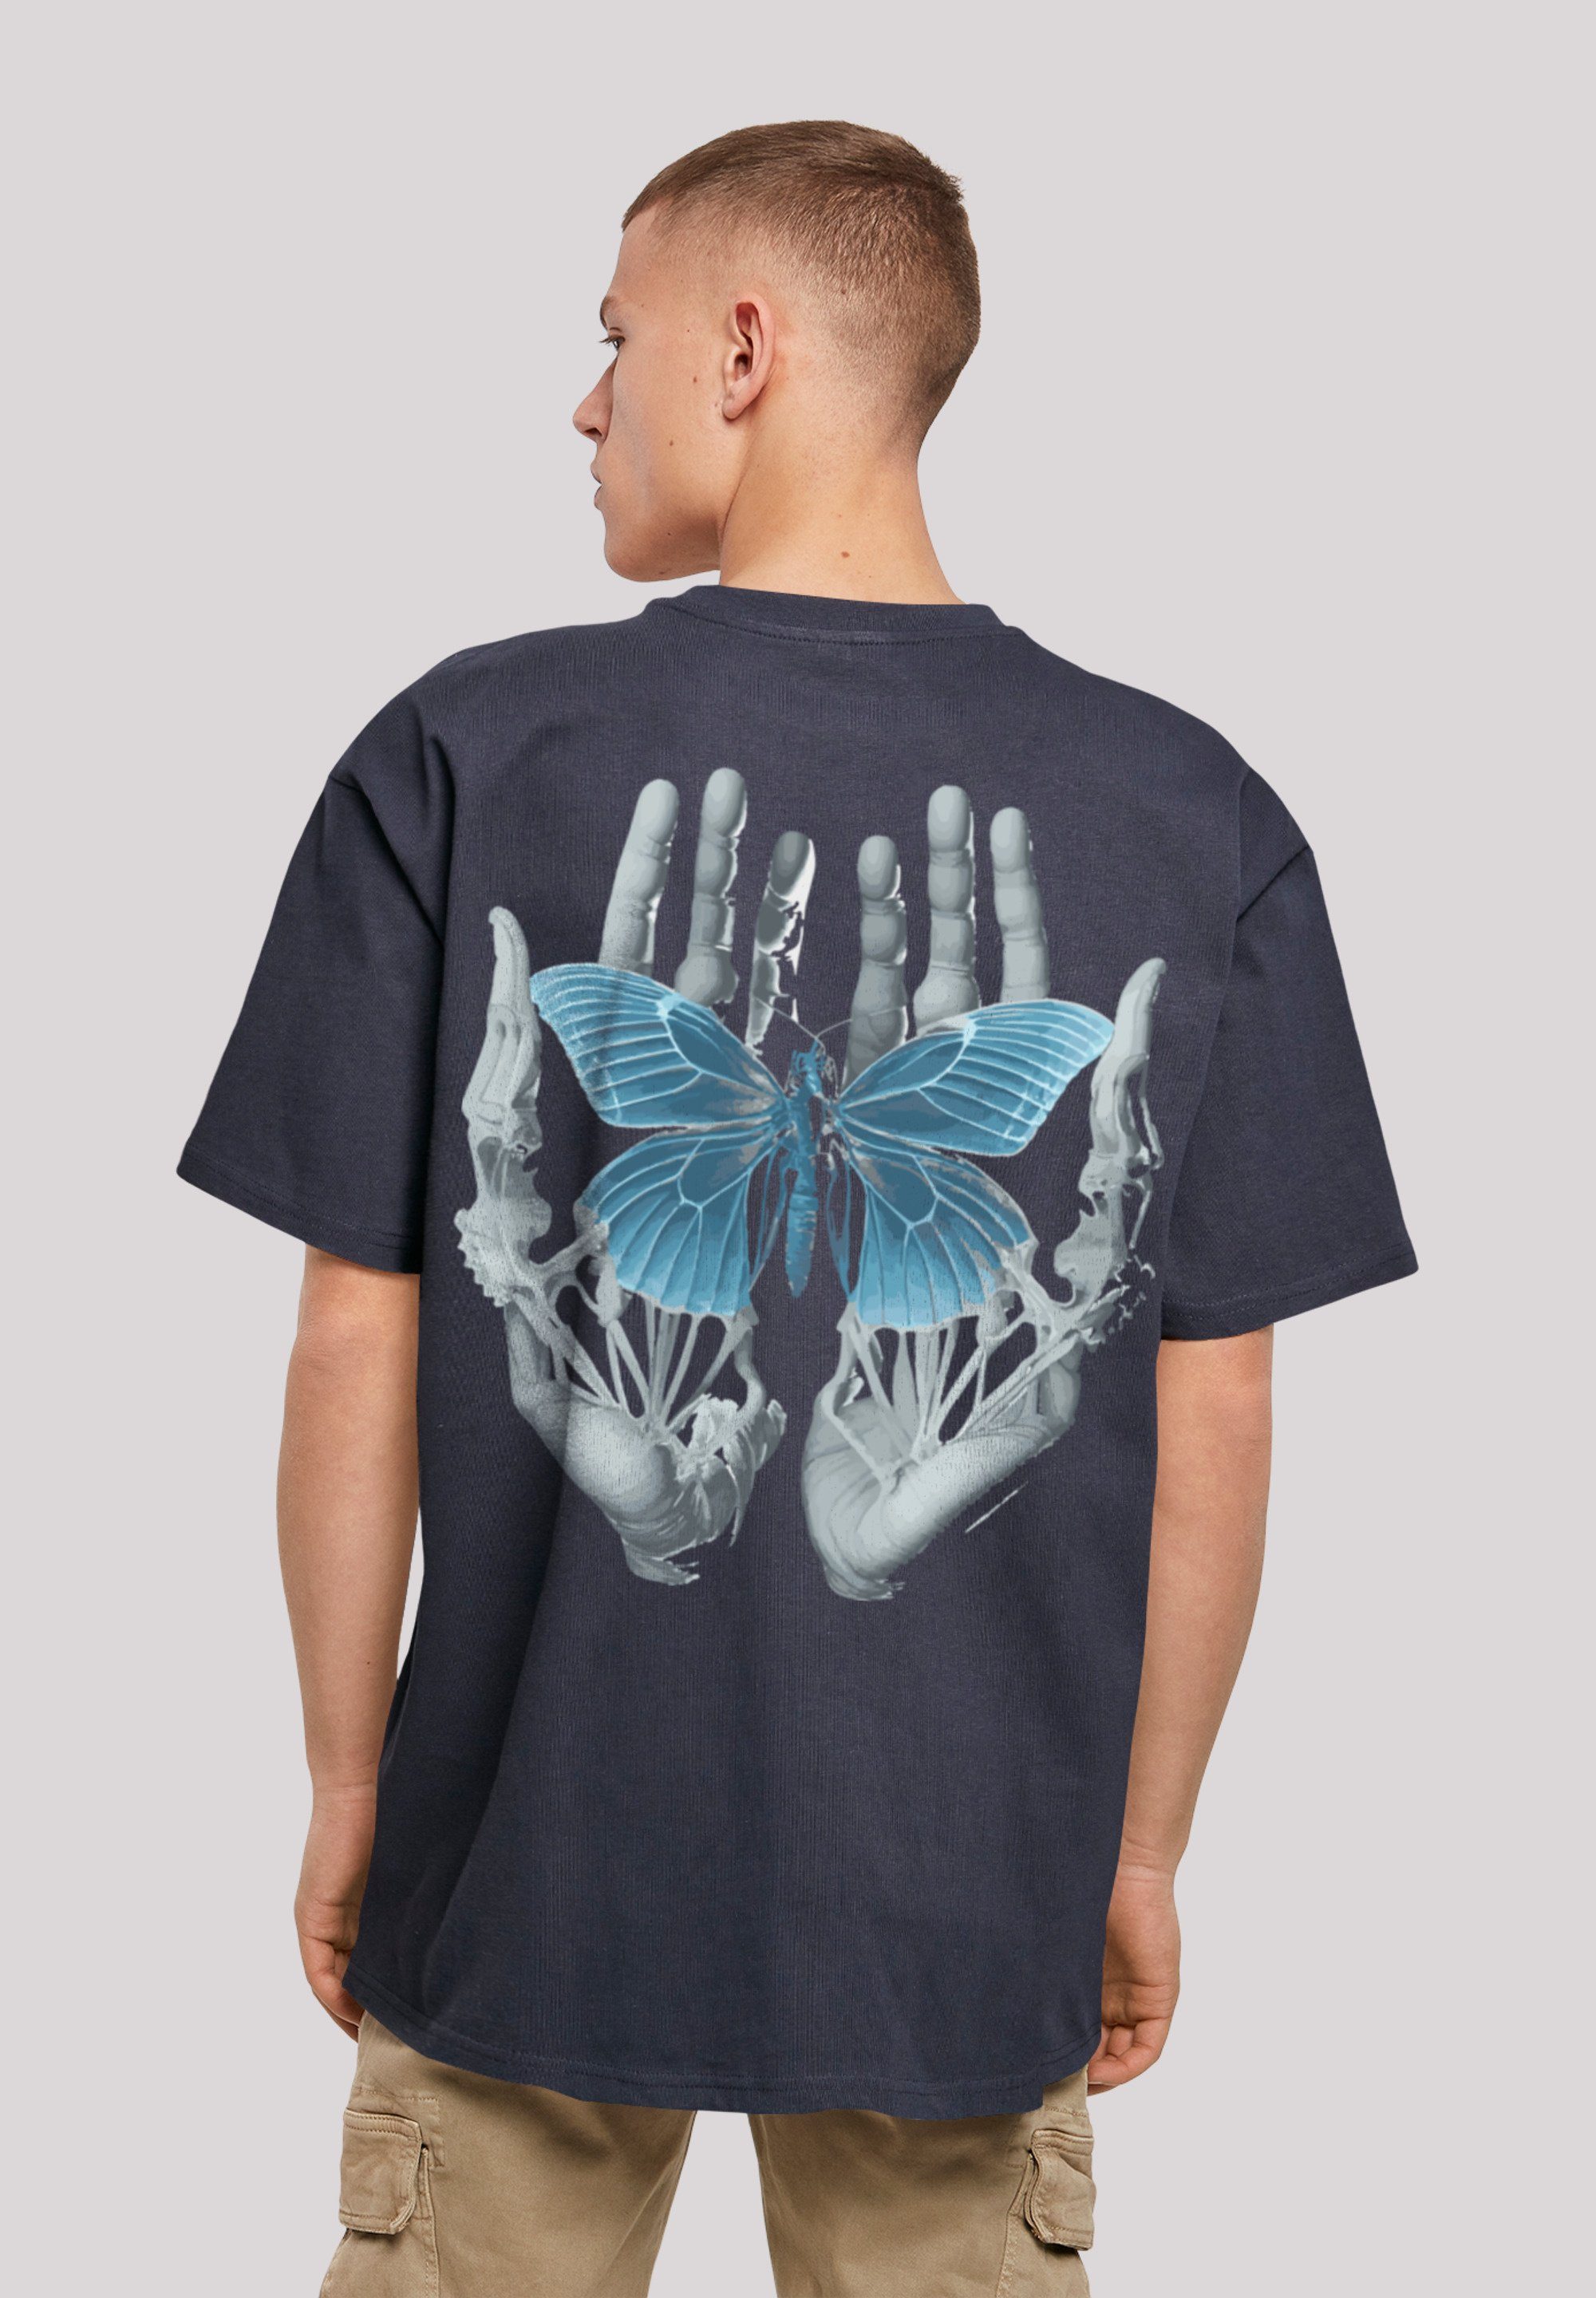 F4NT4STIC T-Shirt Skelett Hände Schmetterling Print navy